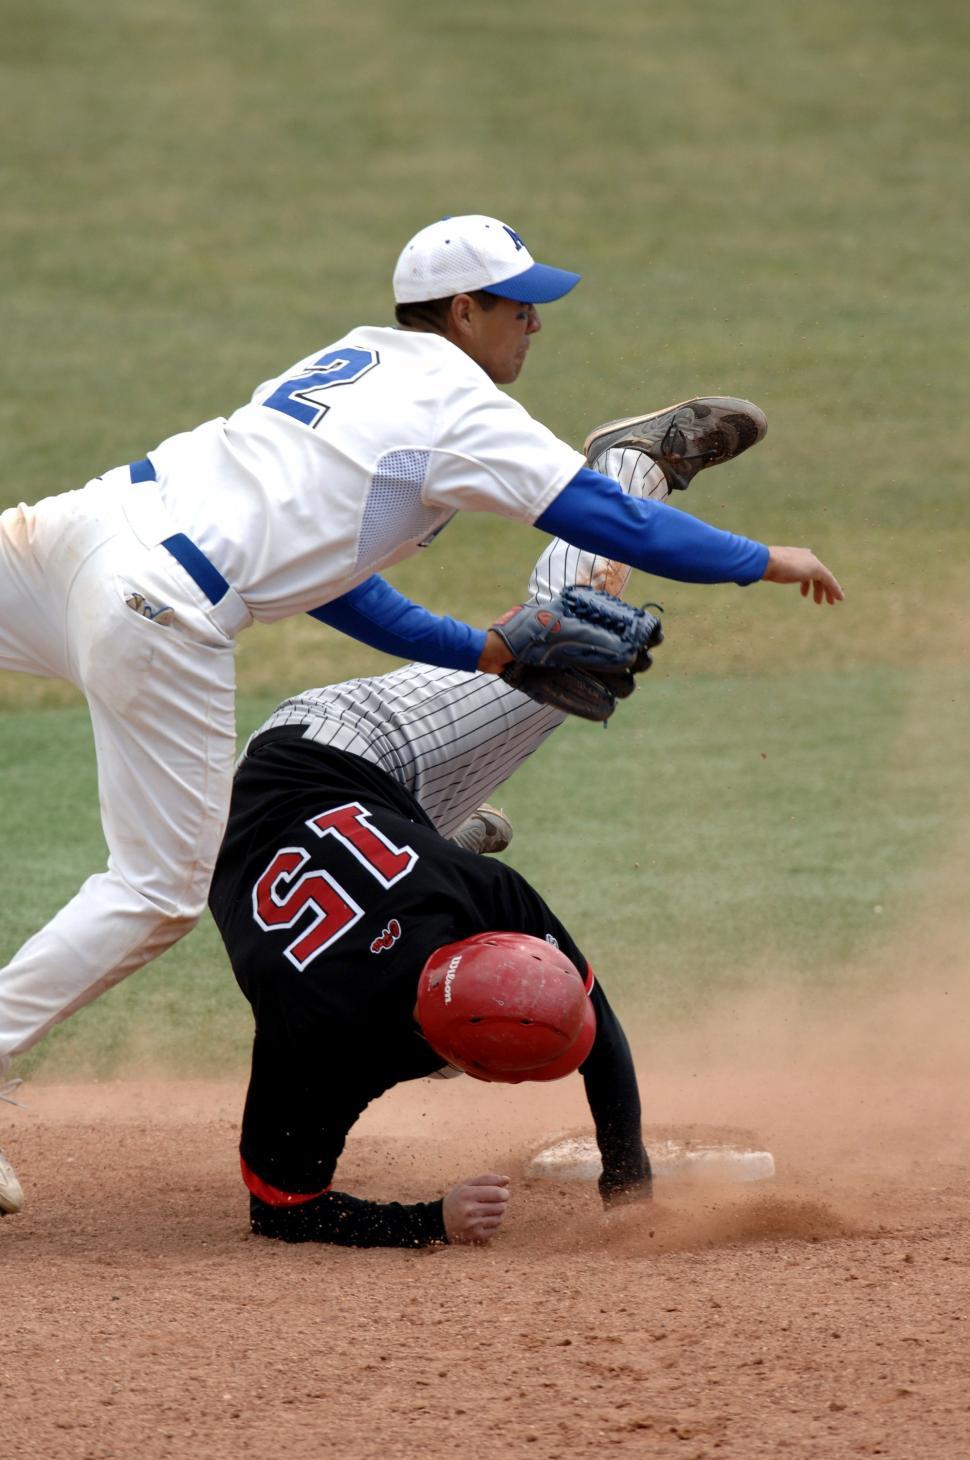 Free Image of Baseball Player Sliding Into Base During Game 